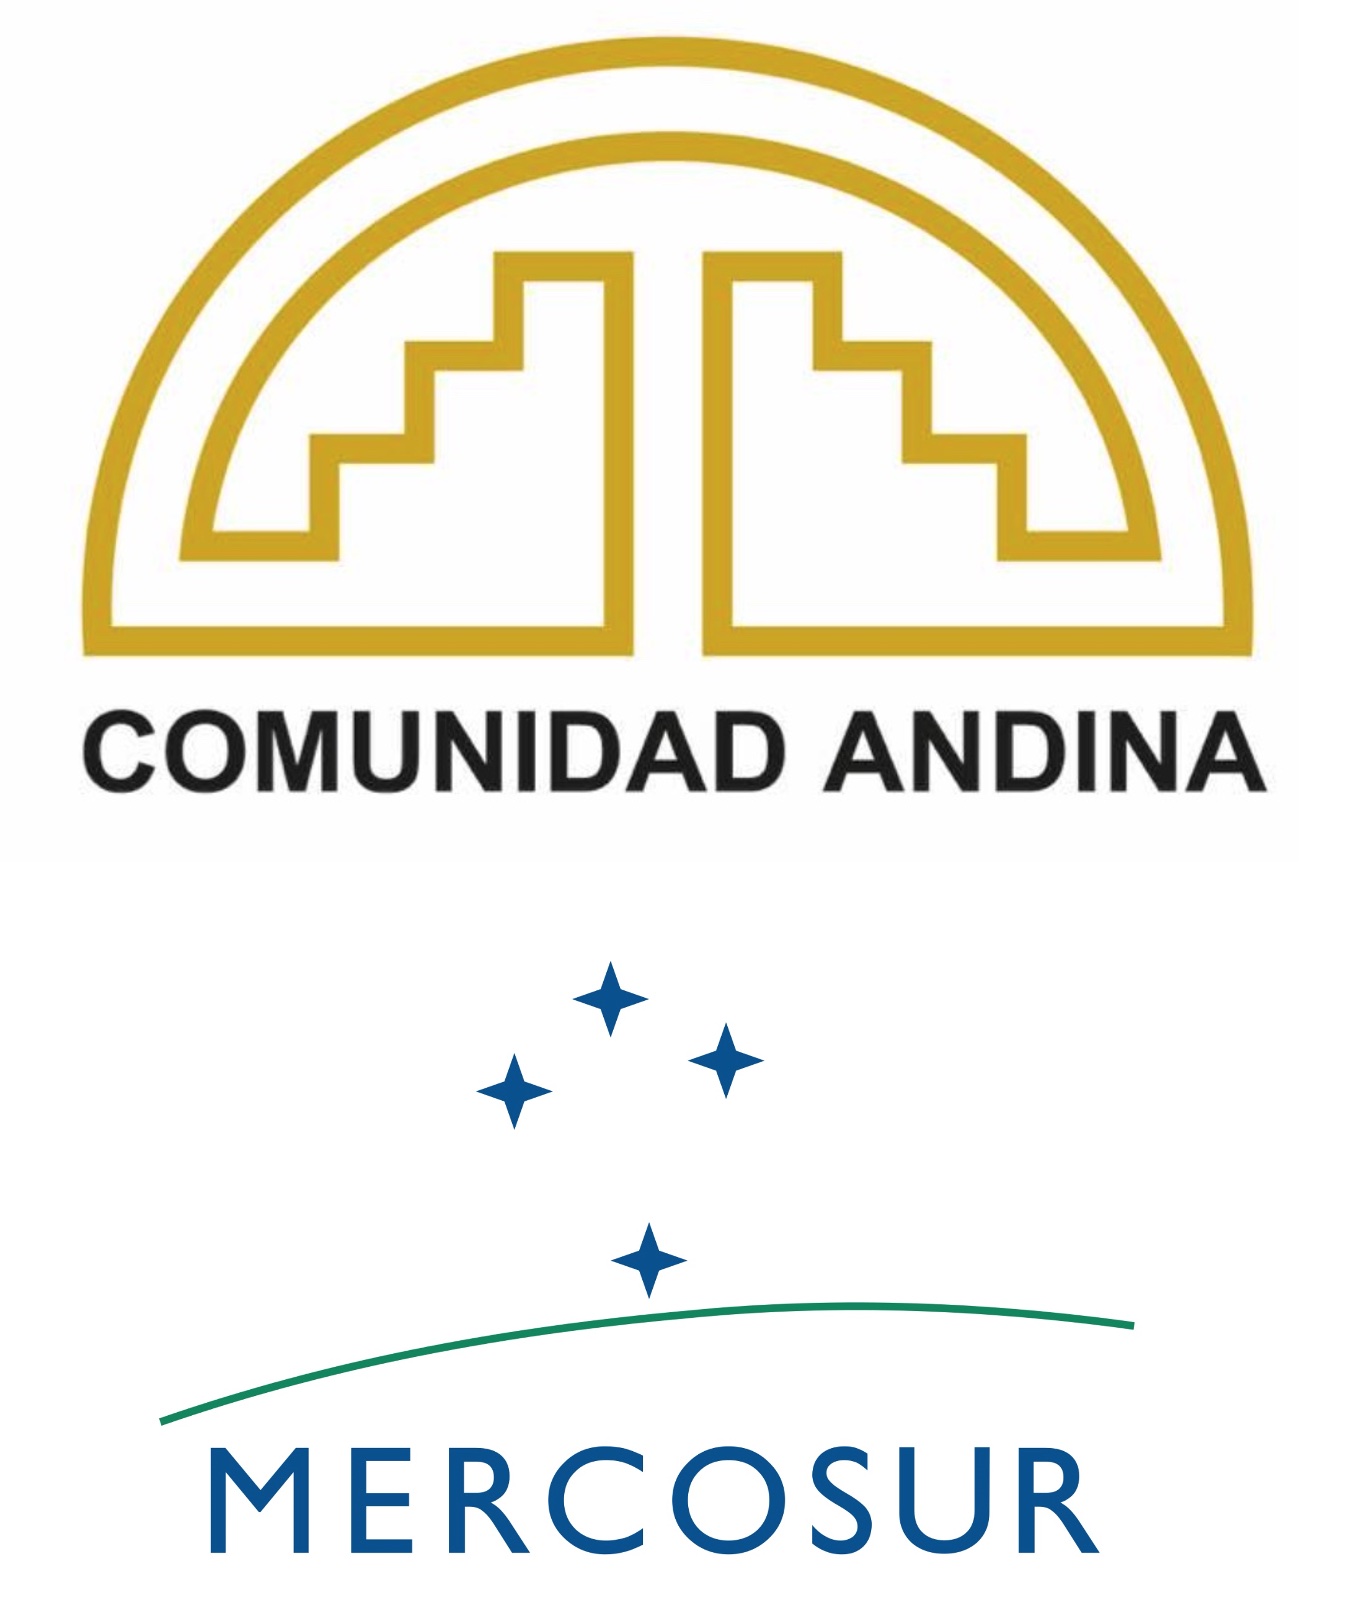 Comunidad Andina Flag and Mercosur flags